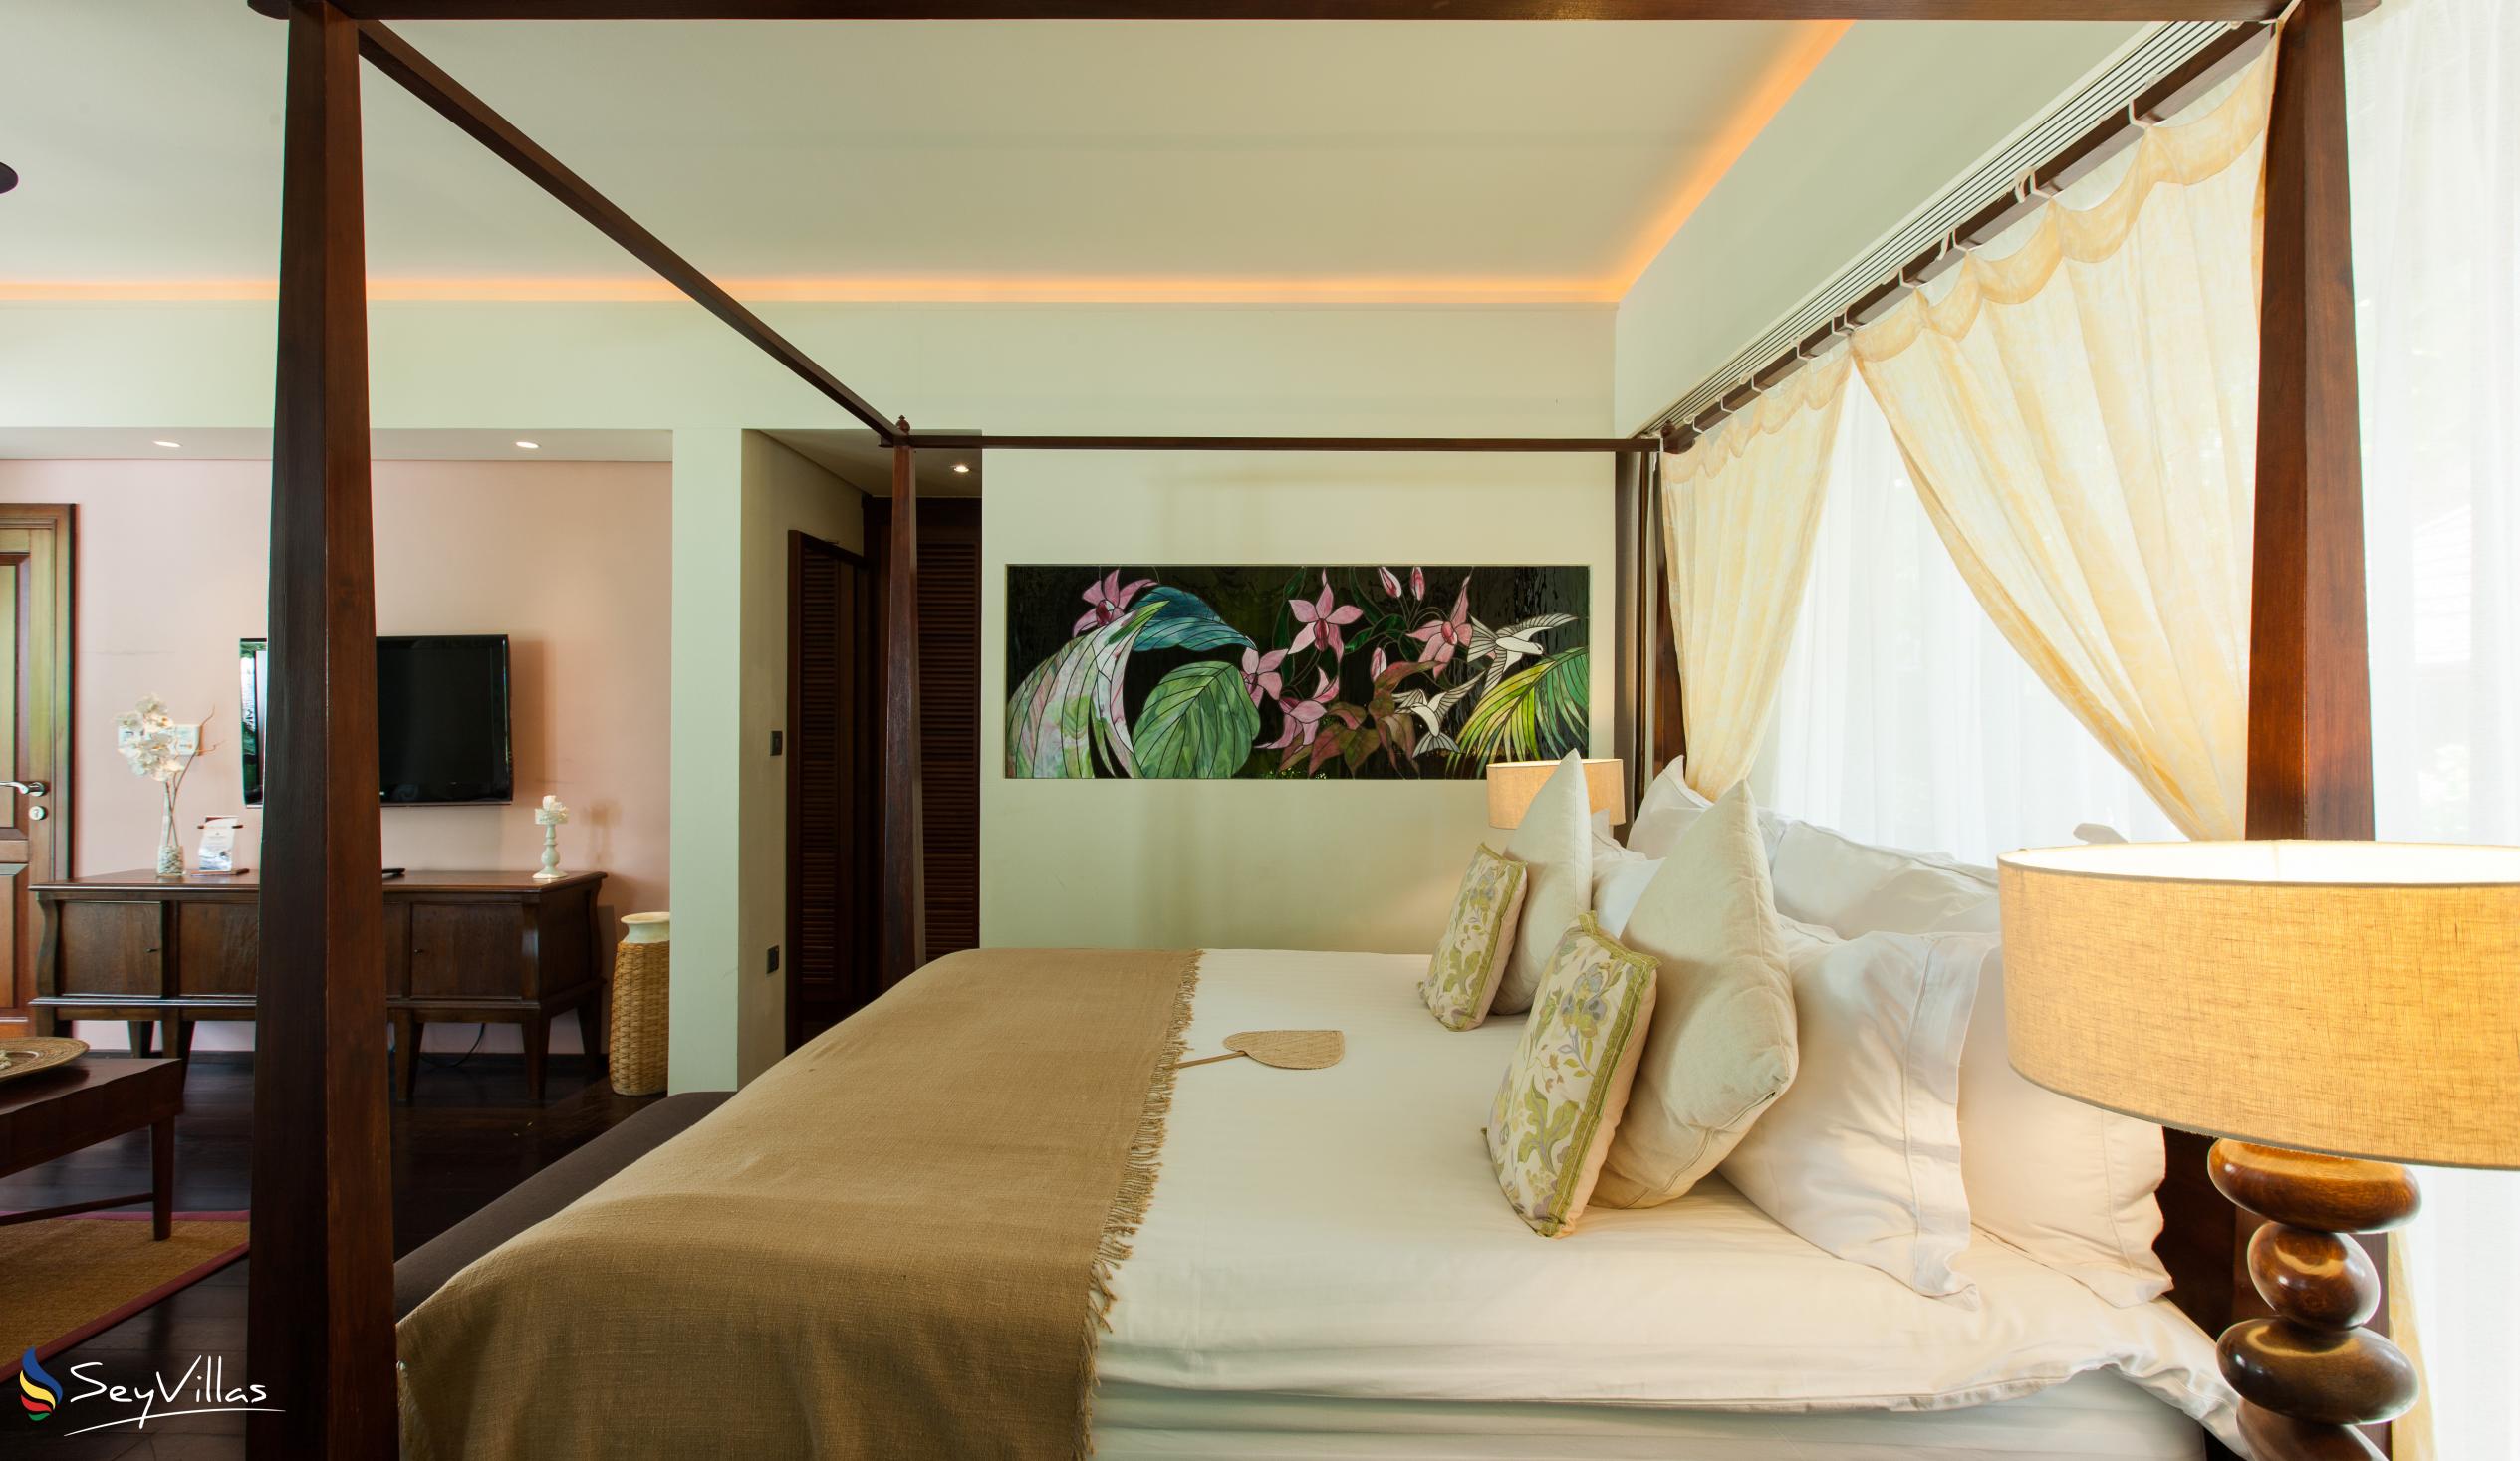 Foto 54: Dhevatara Beach Hotel - Suite avec vue face à l'océan - Praslin (Seychelles)